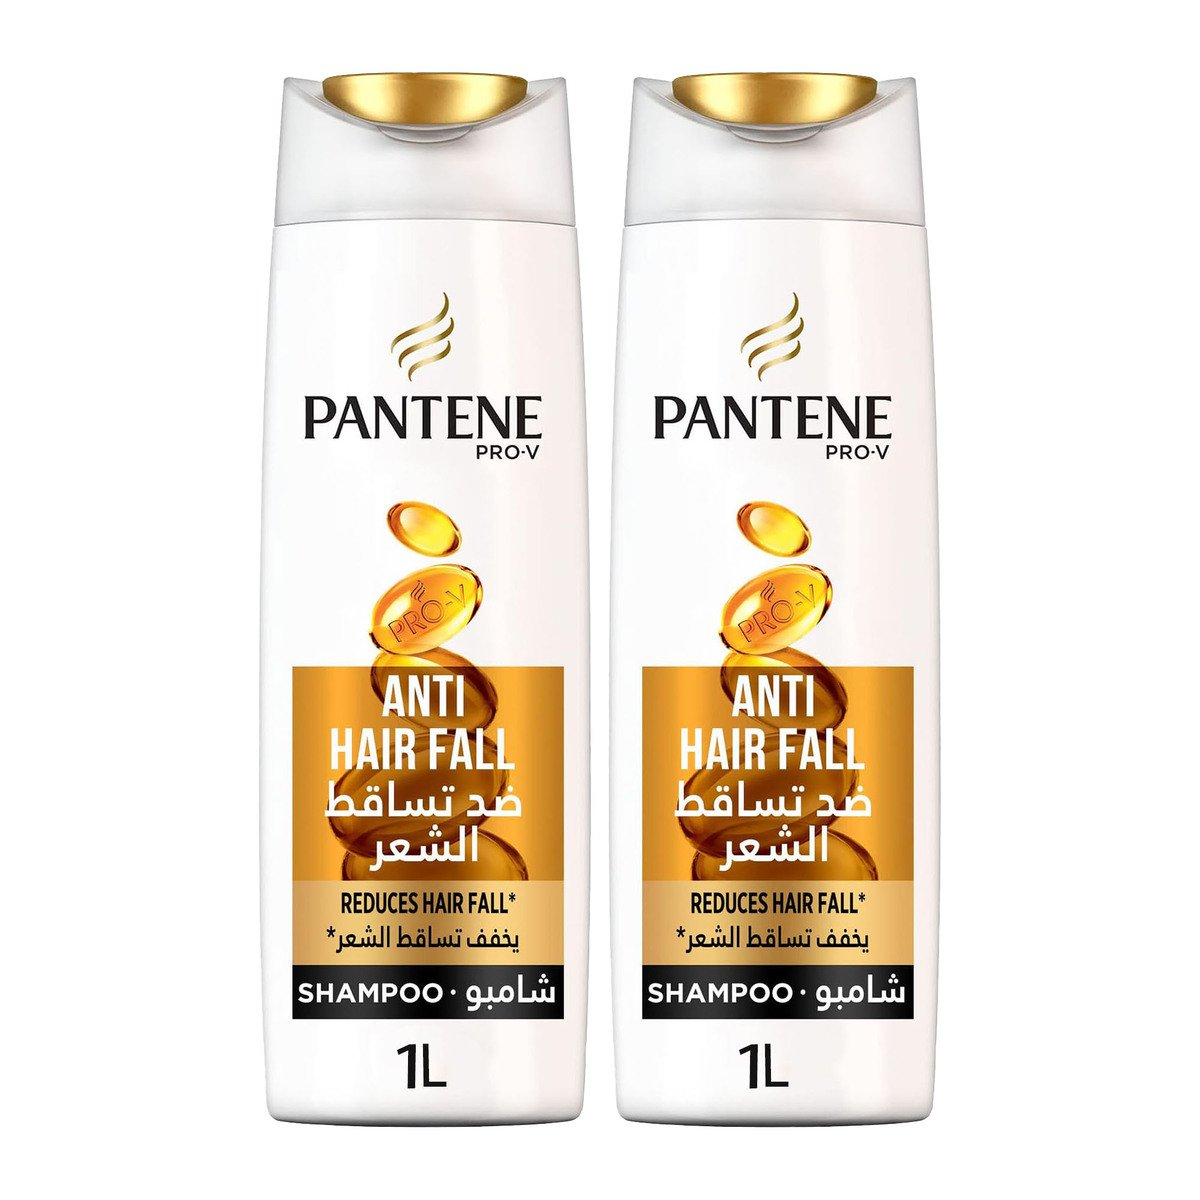 Pantene Anti Hairfall Shampoo Value Pack 2 x 1 Litre